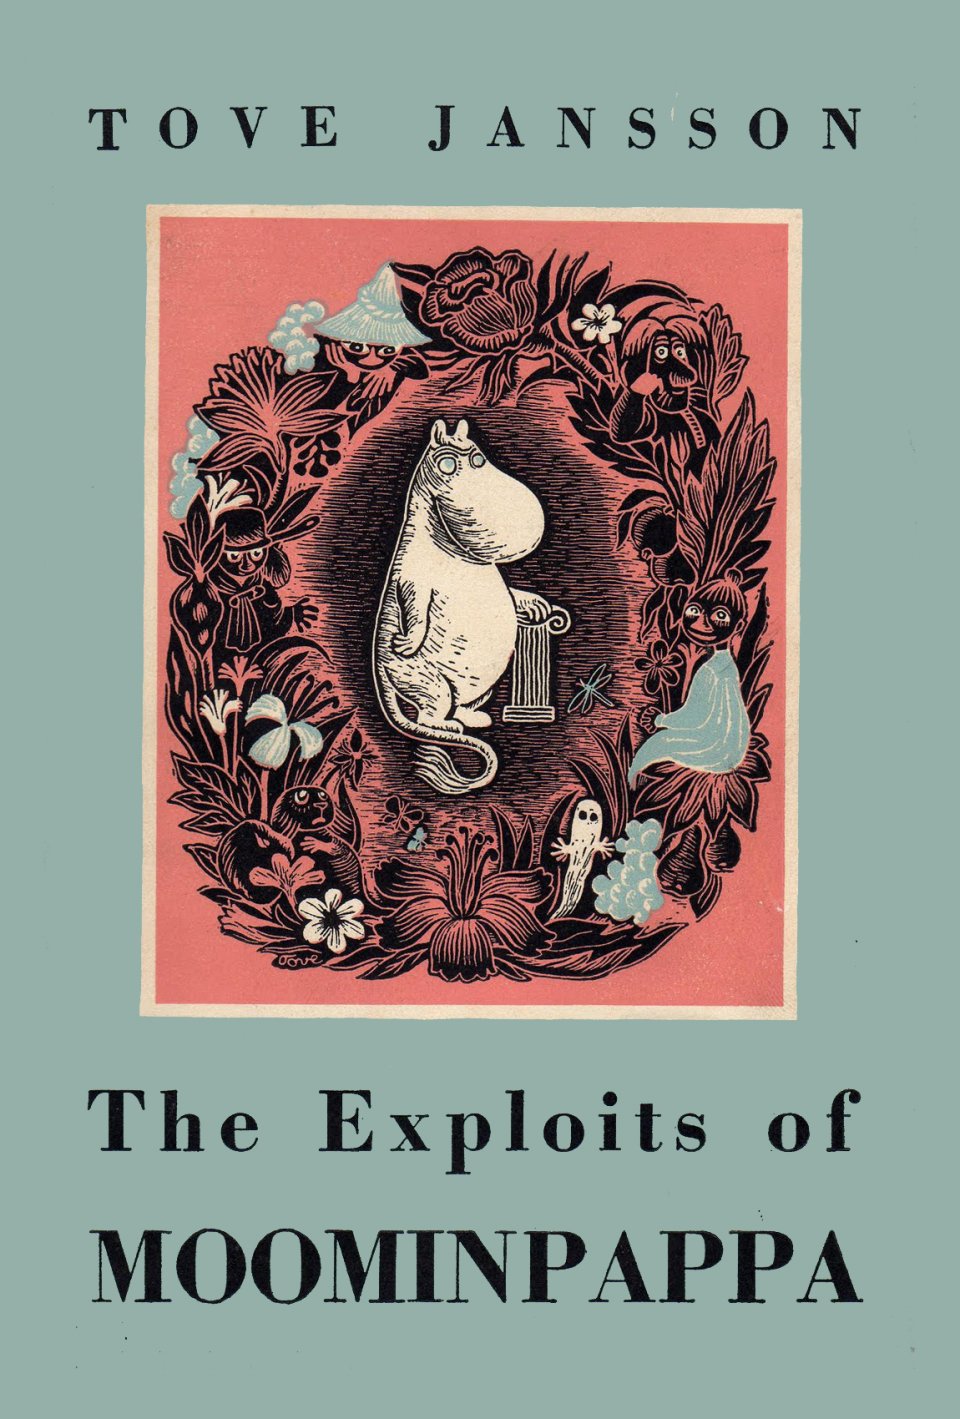 The exploits of Moominpappa original cover